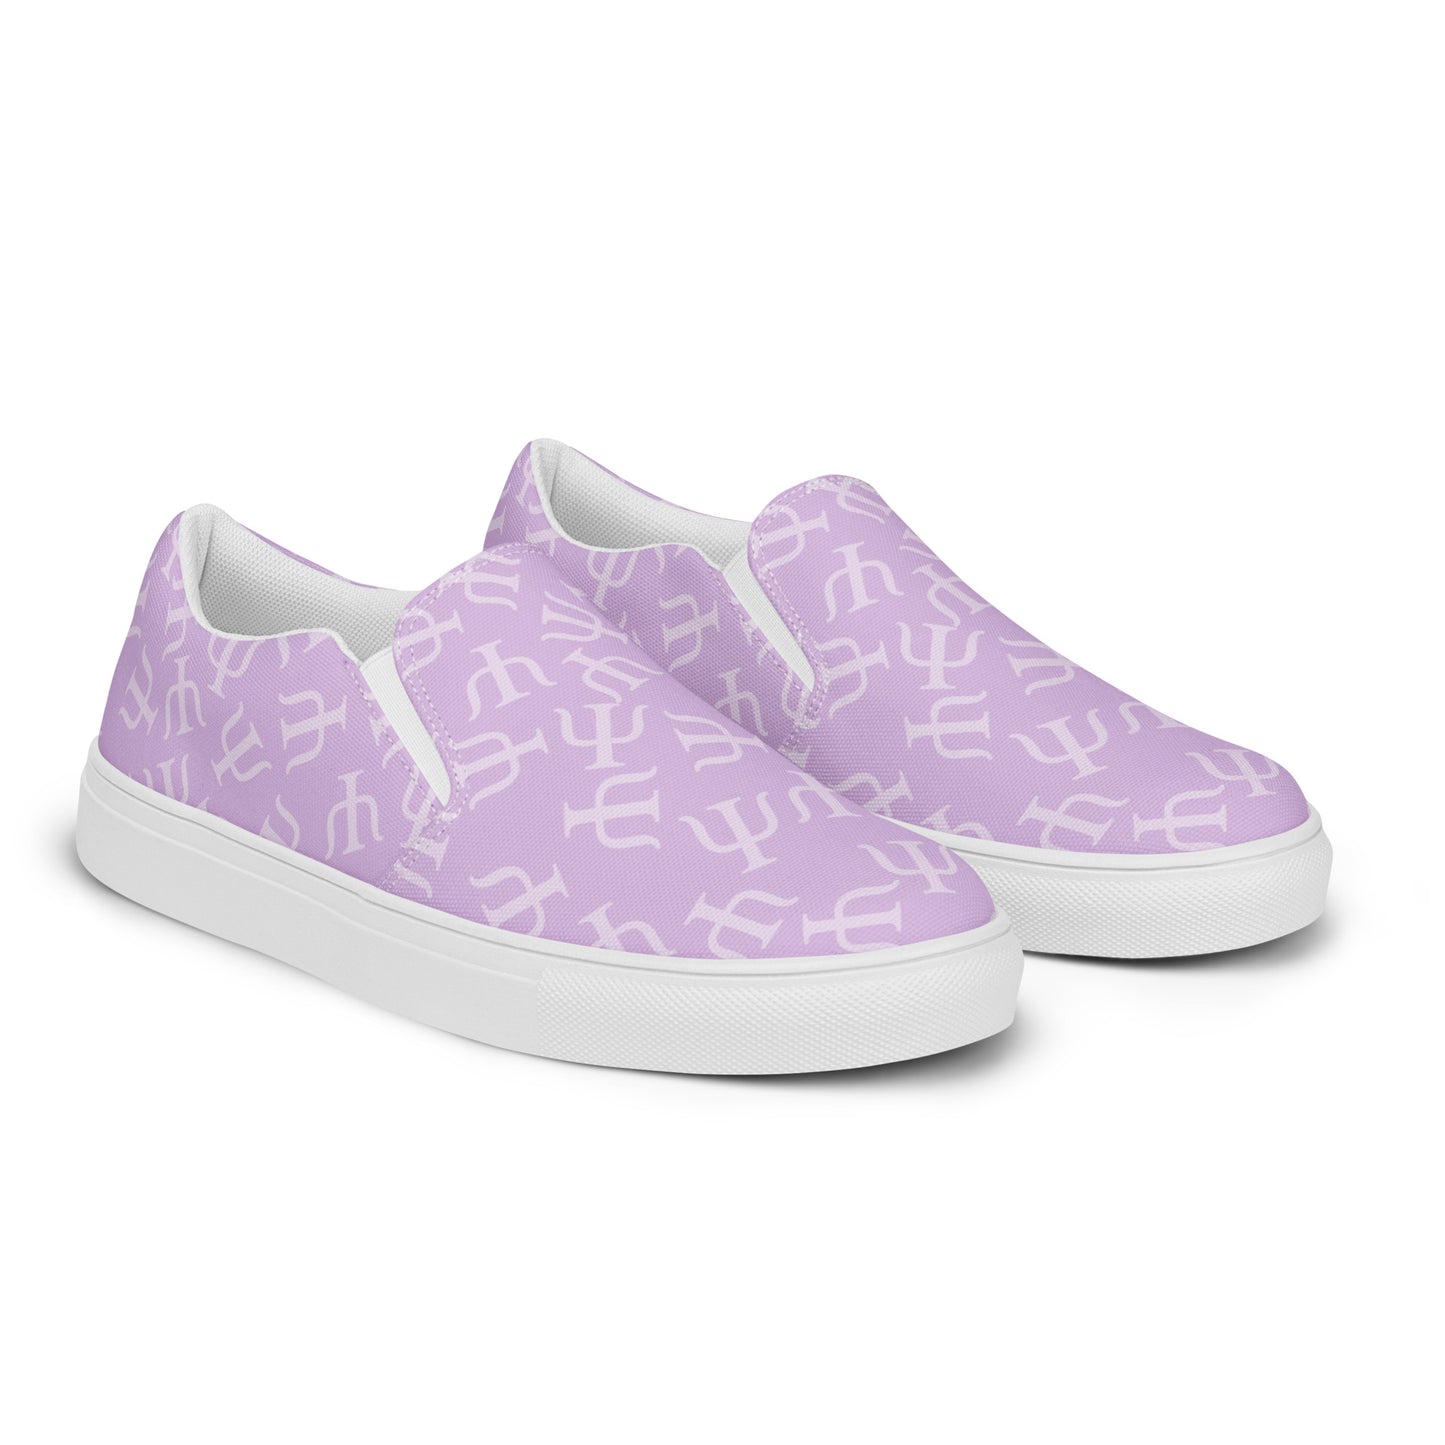 Lavender Psych Symbol Slip-on Canvas Shoes (Women's Sizes)